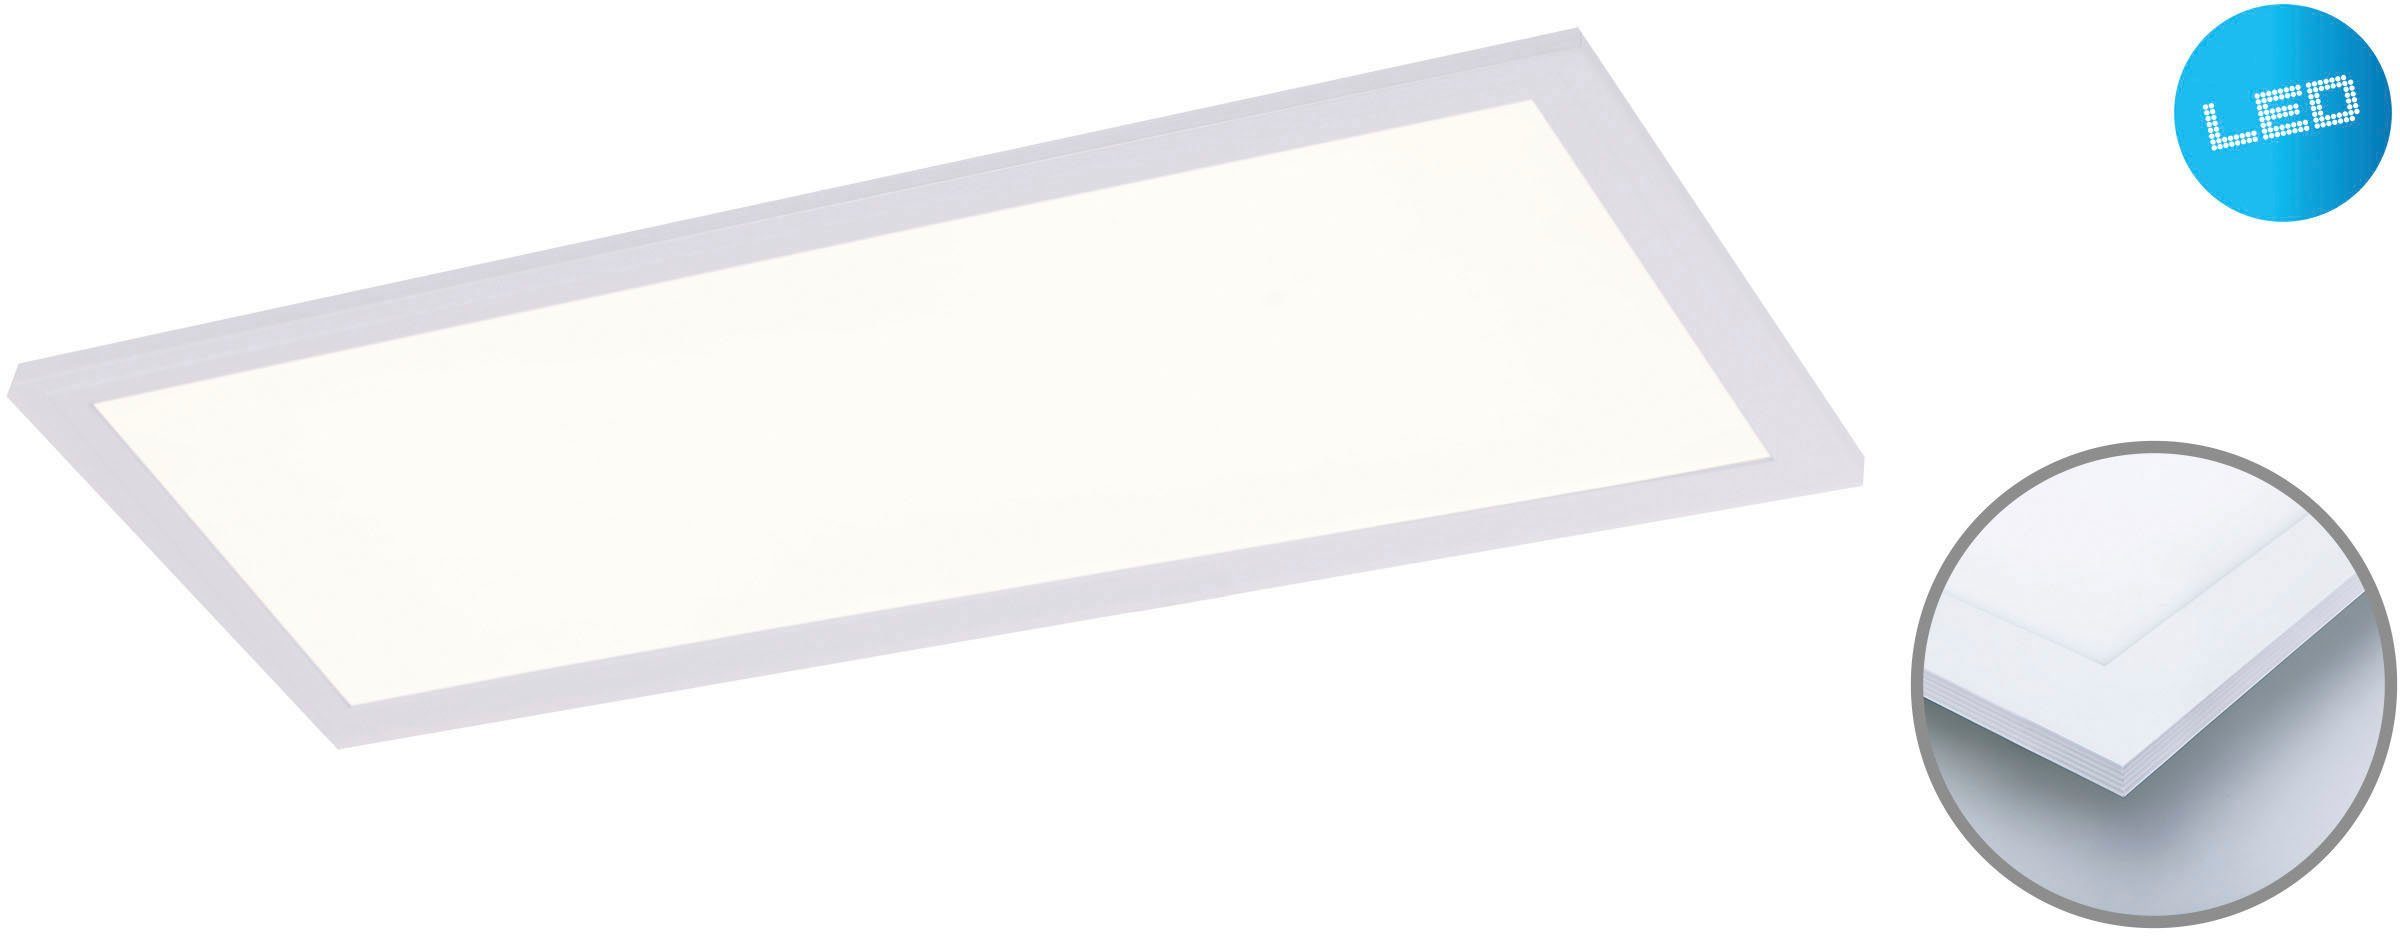 näve LED Panel Lichtfarbe LED, inkl. Treiber Nicola, 59,5cm, Länge neutralweiß, Neutralweiß, fest integriert, weiß, LED